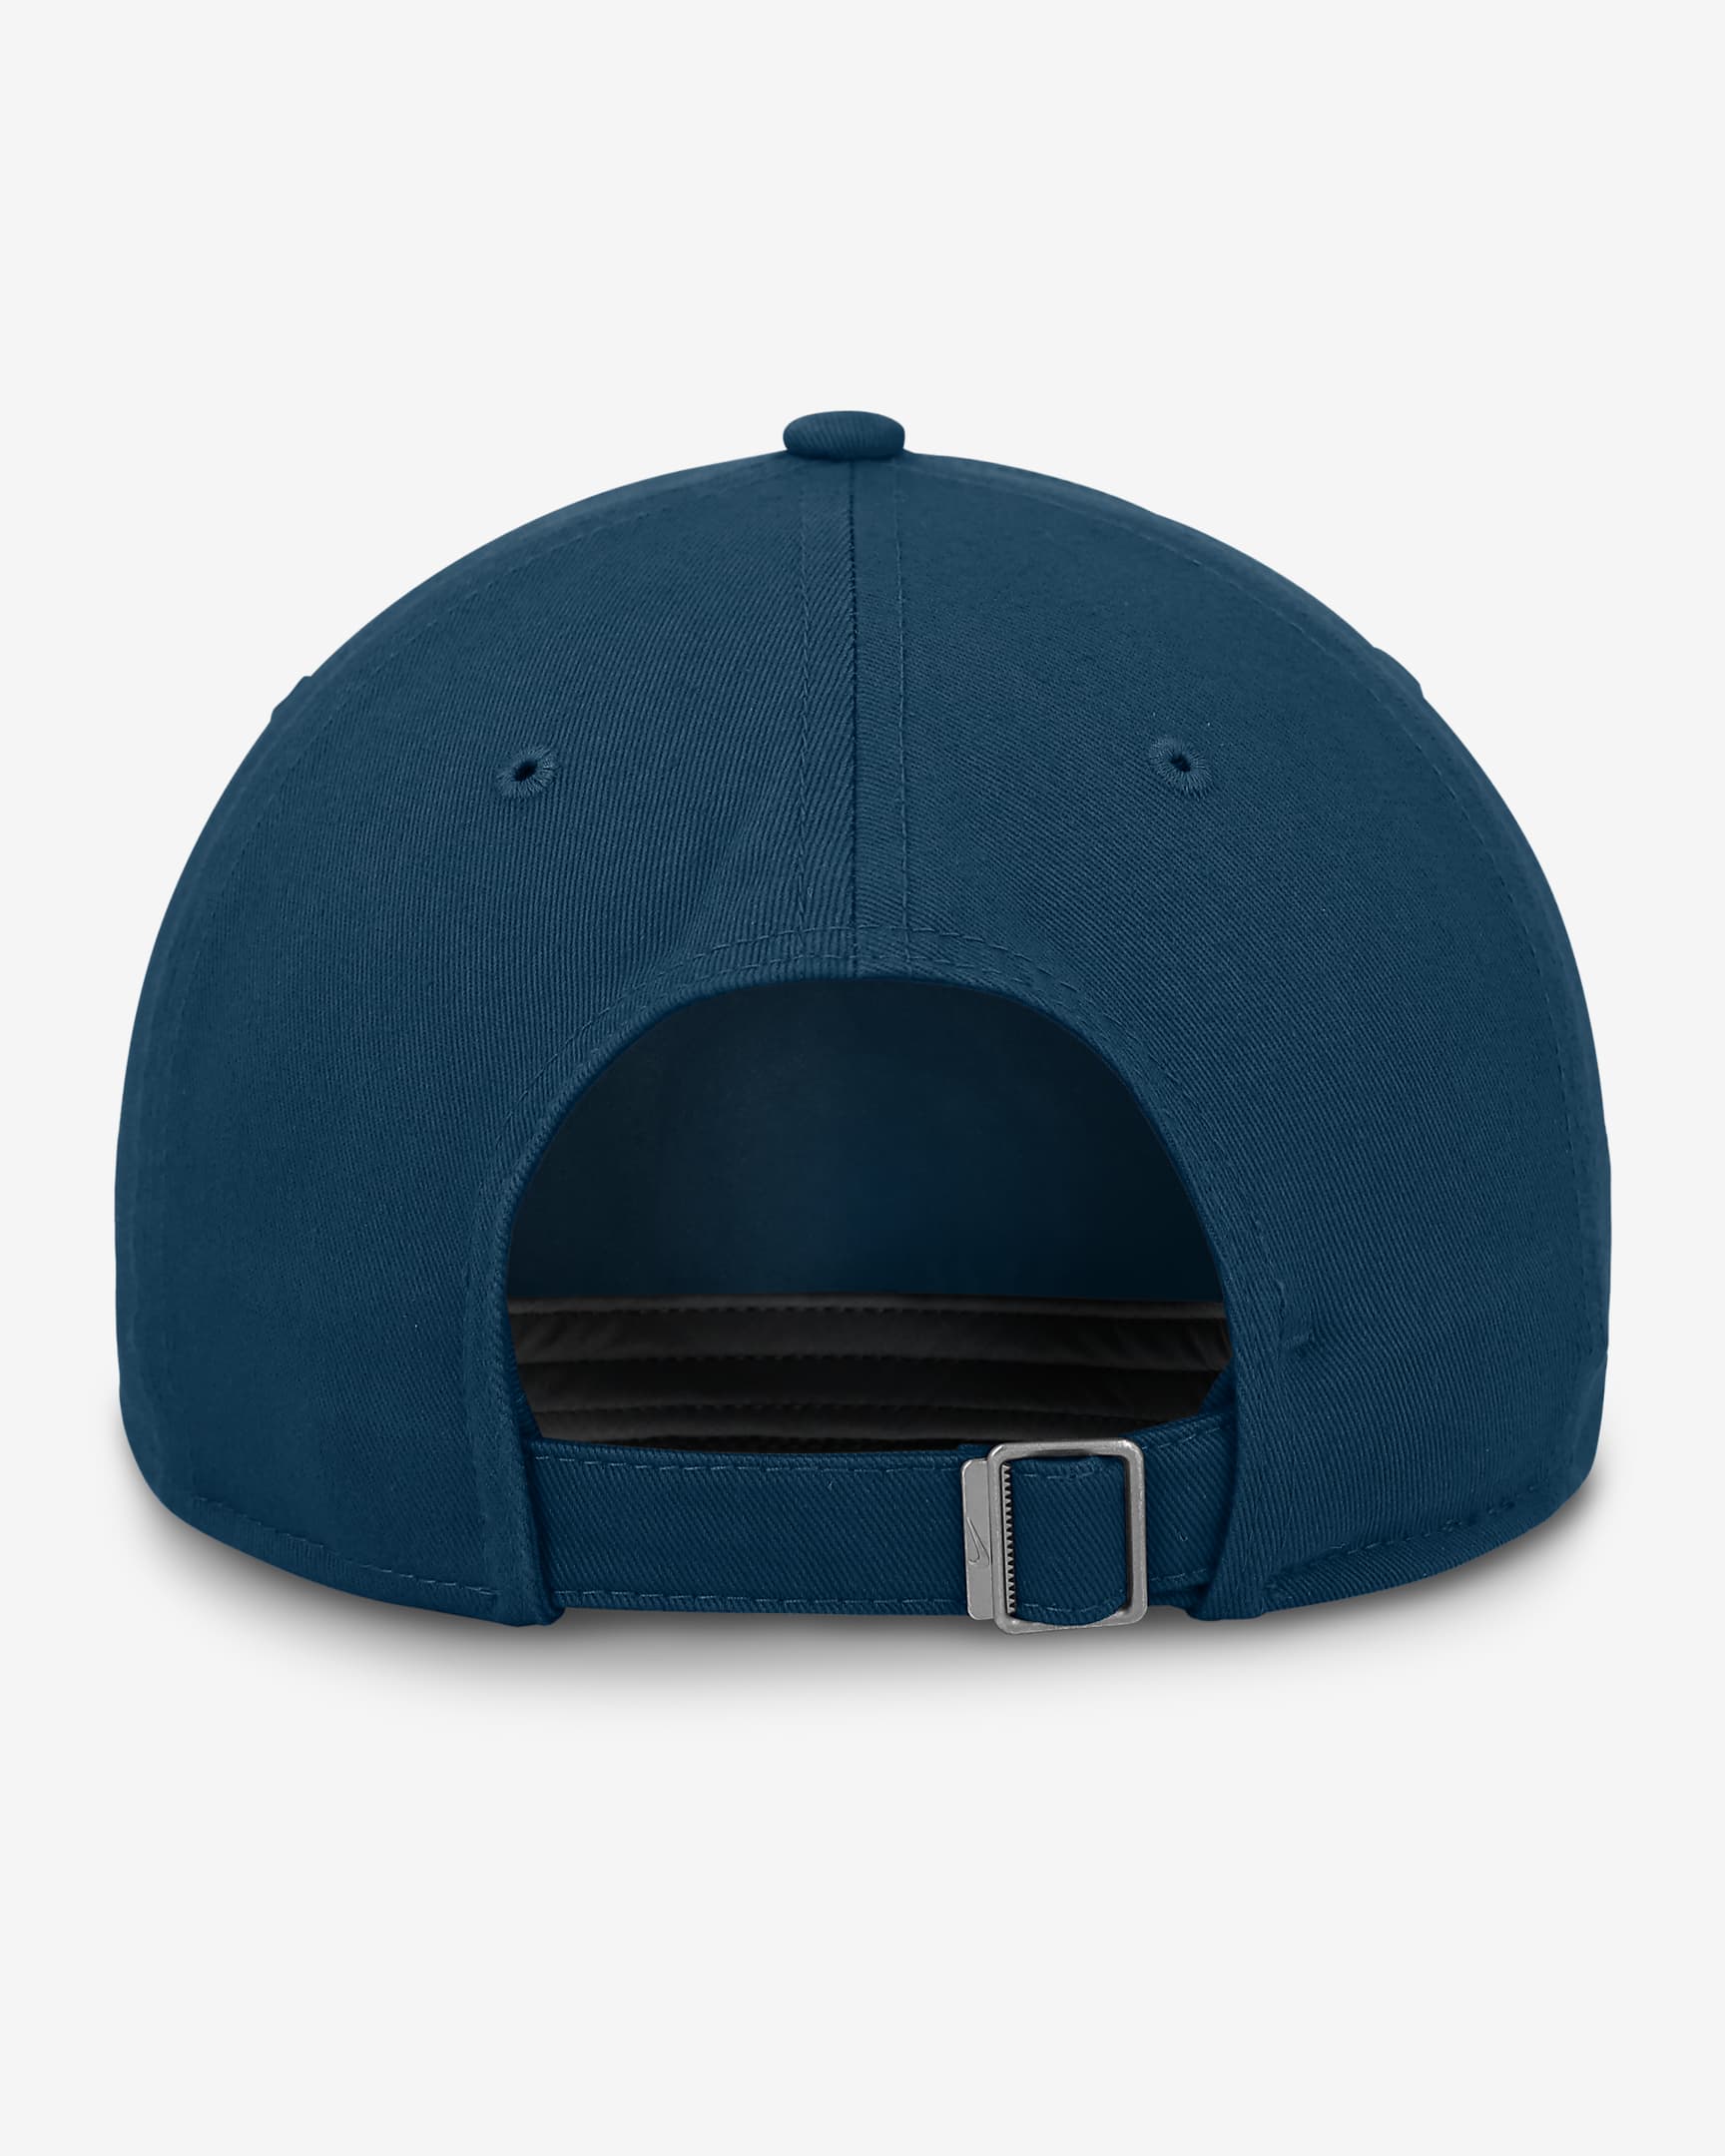 Los Angeles Dodgers Club Men's Nike MLB Adjustable Hat. Nike.com